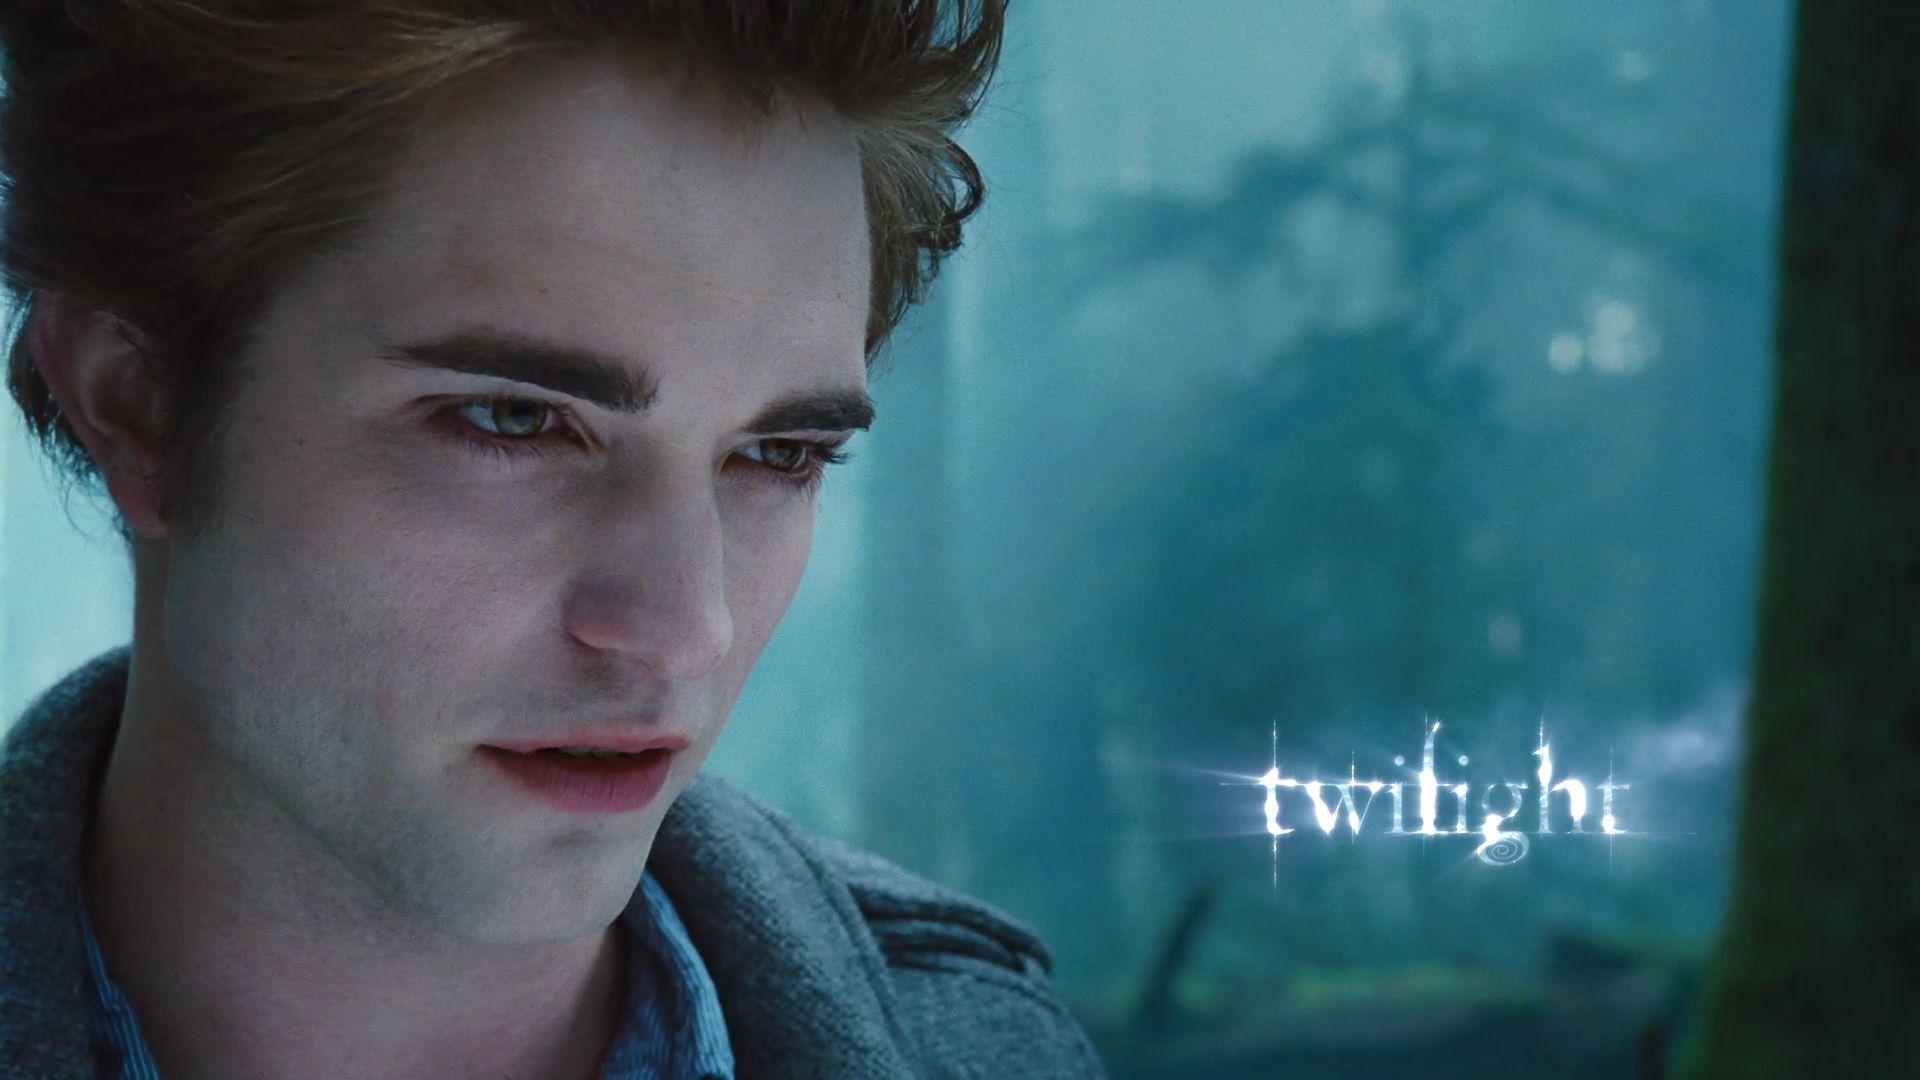 1920x1080 Twilight hình nền Edward Cullen